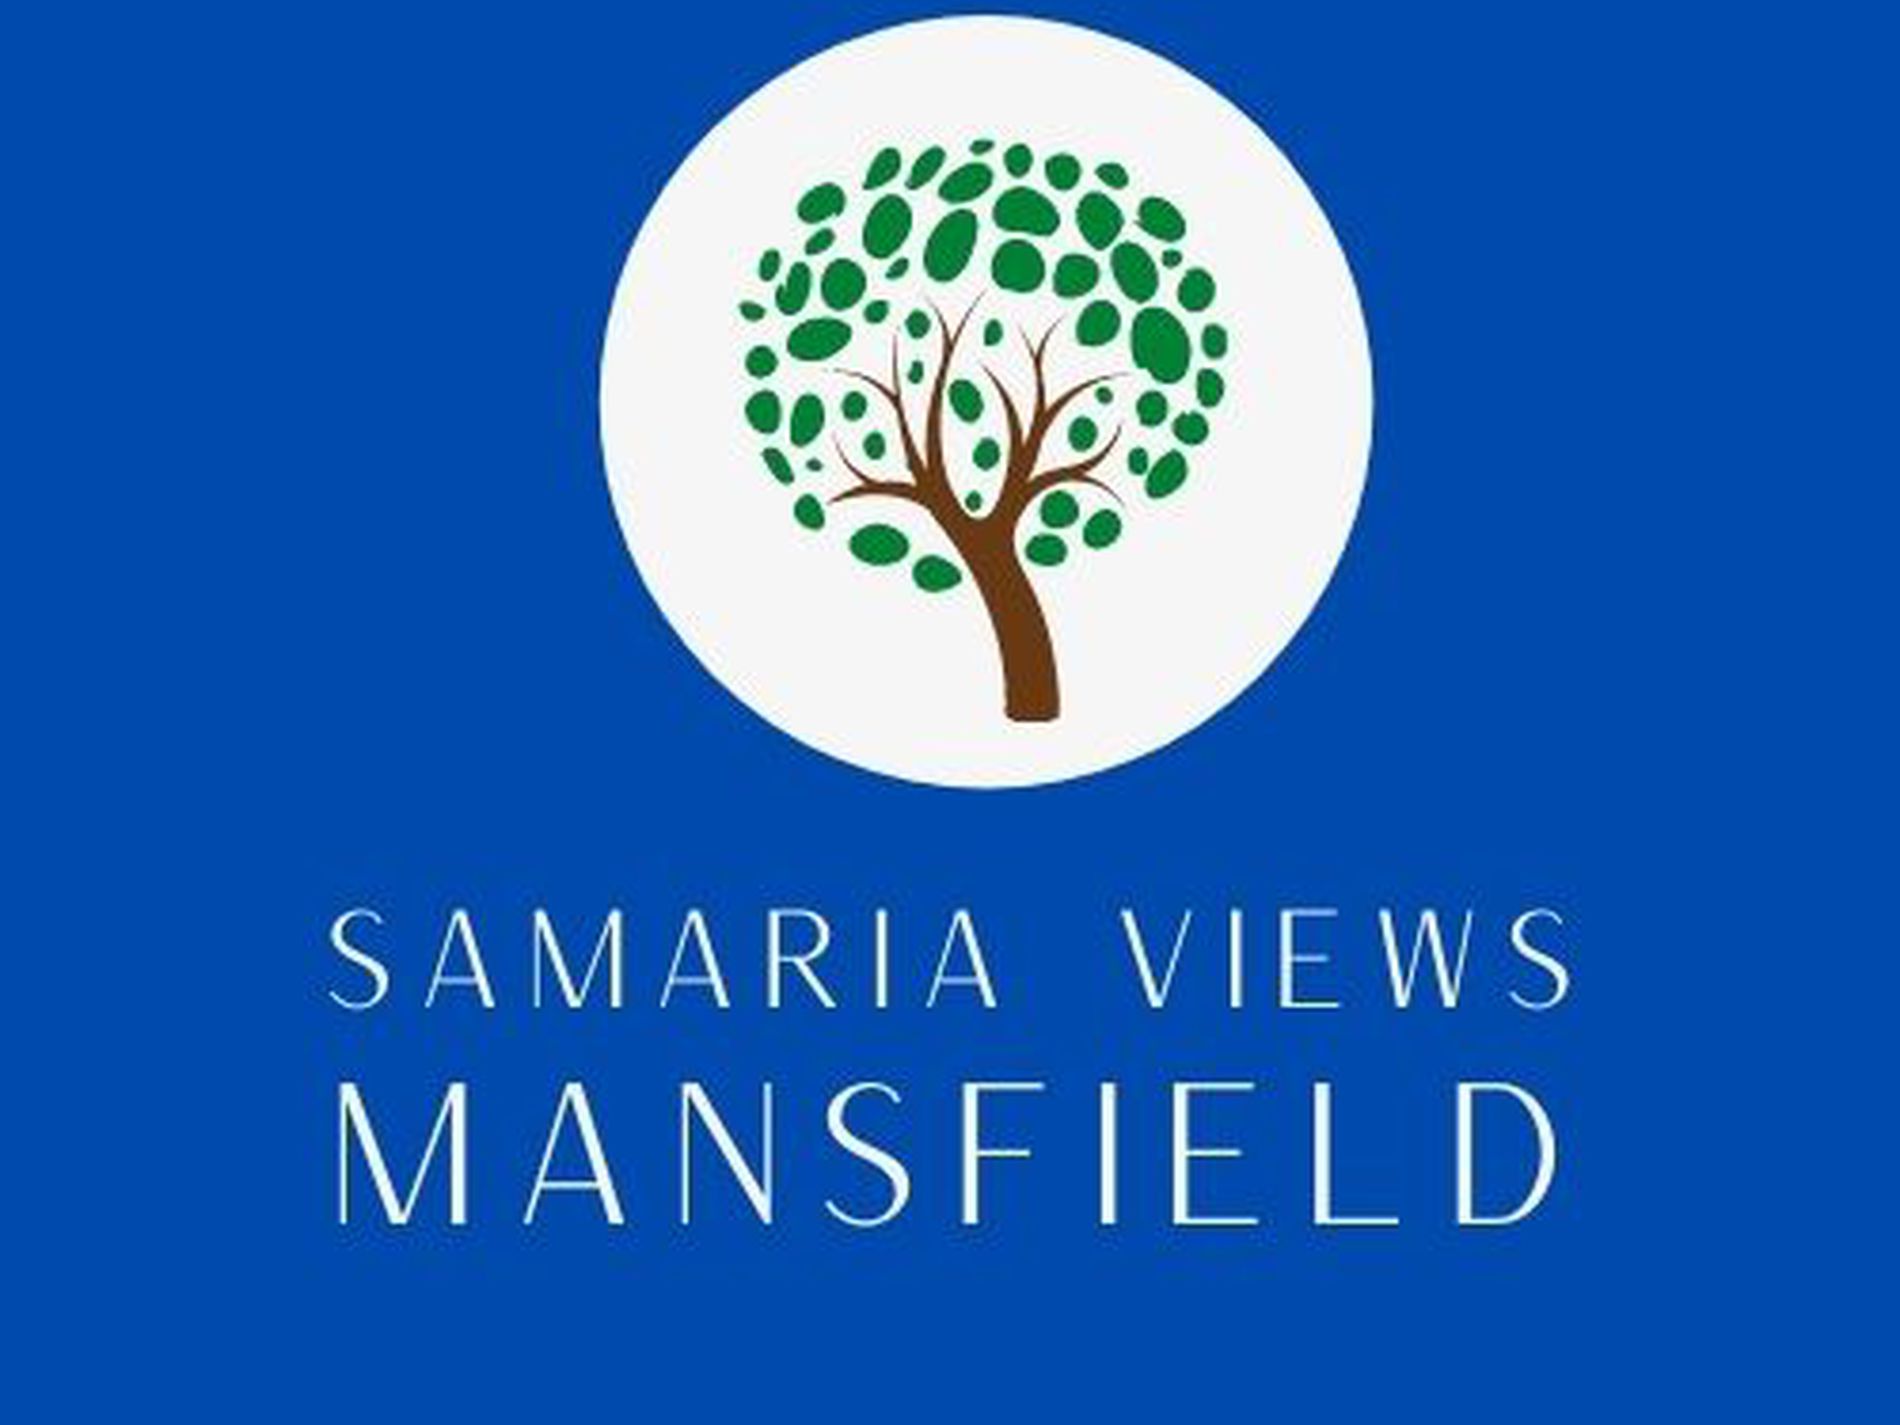 Lot 113, Samaria Views, Mansfield